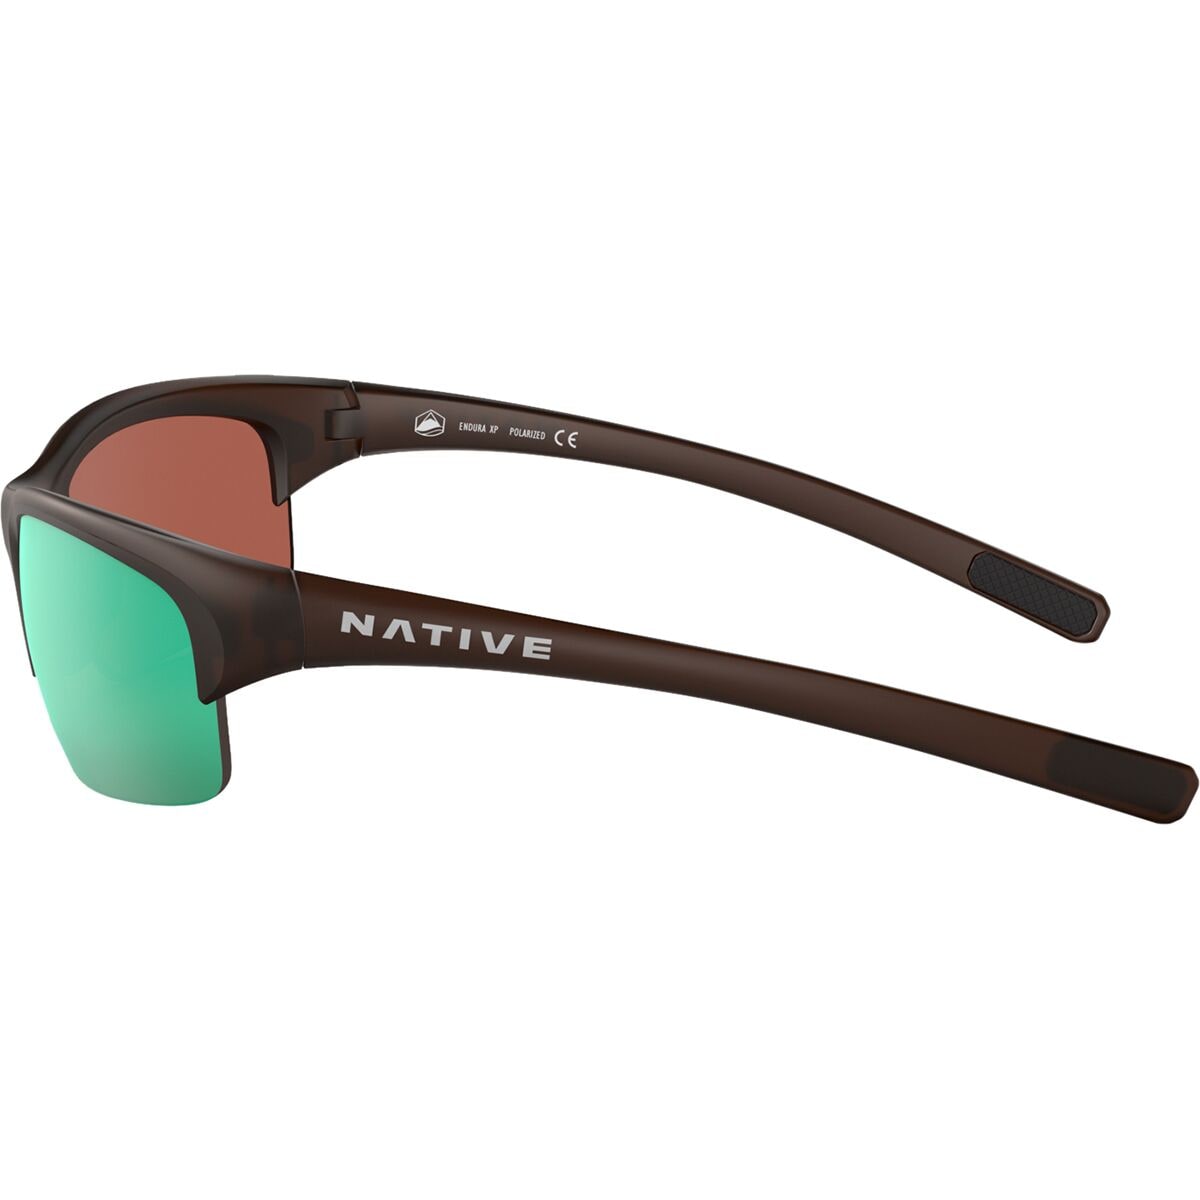  Native Eyewear Endura XP Polarized Sunglasses - Accessories